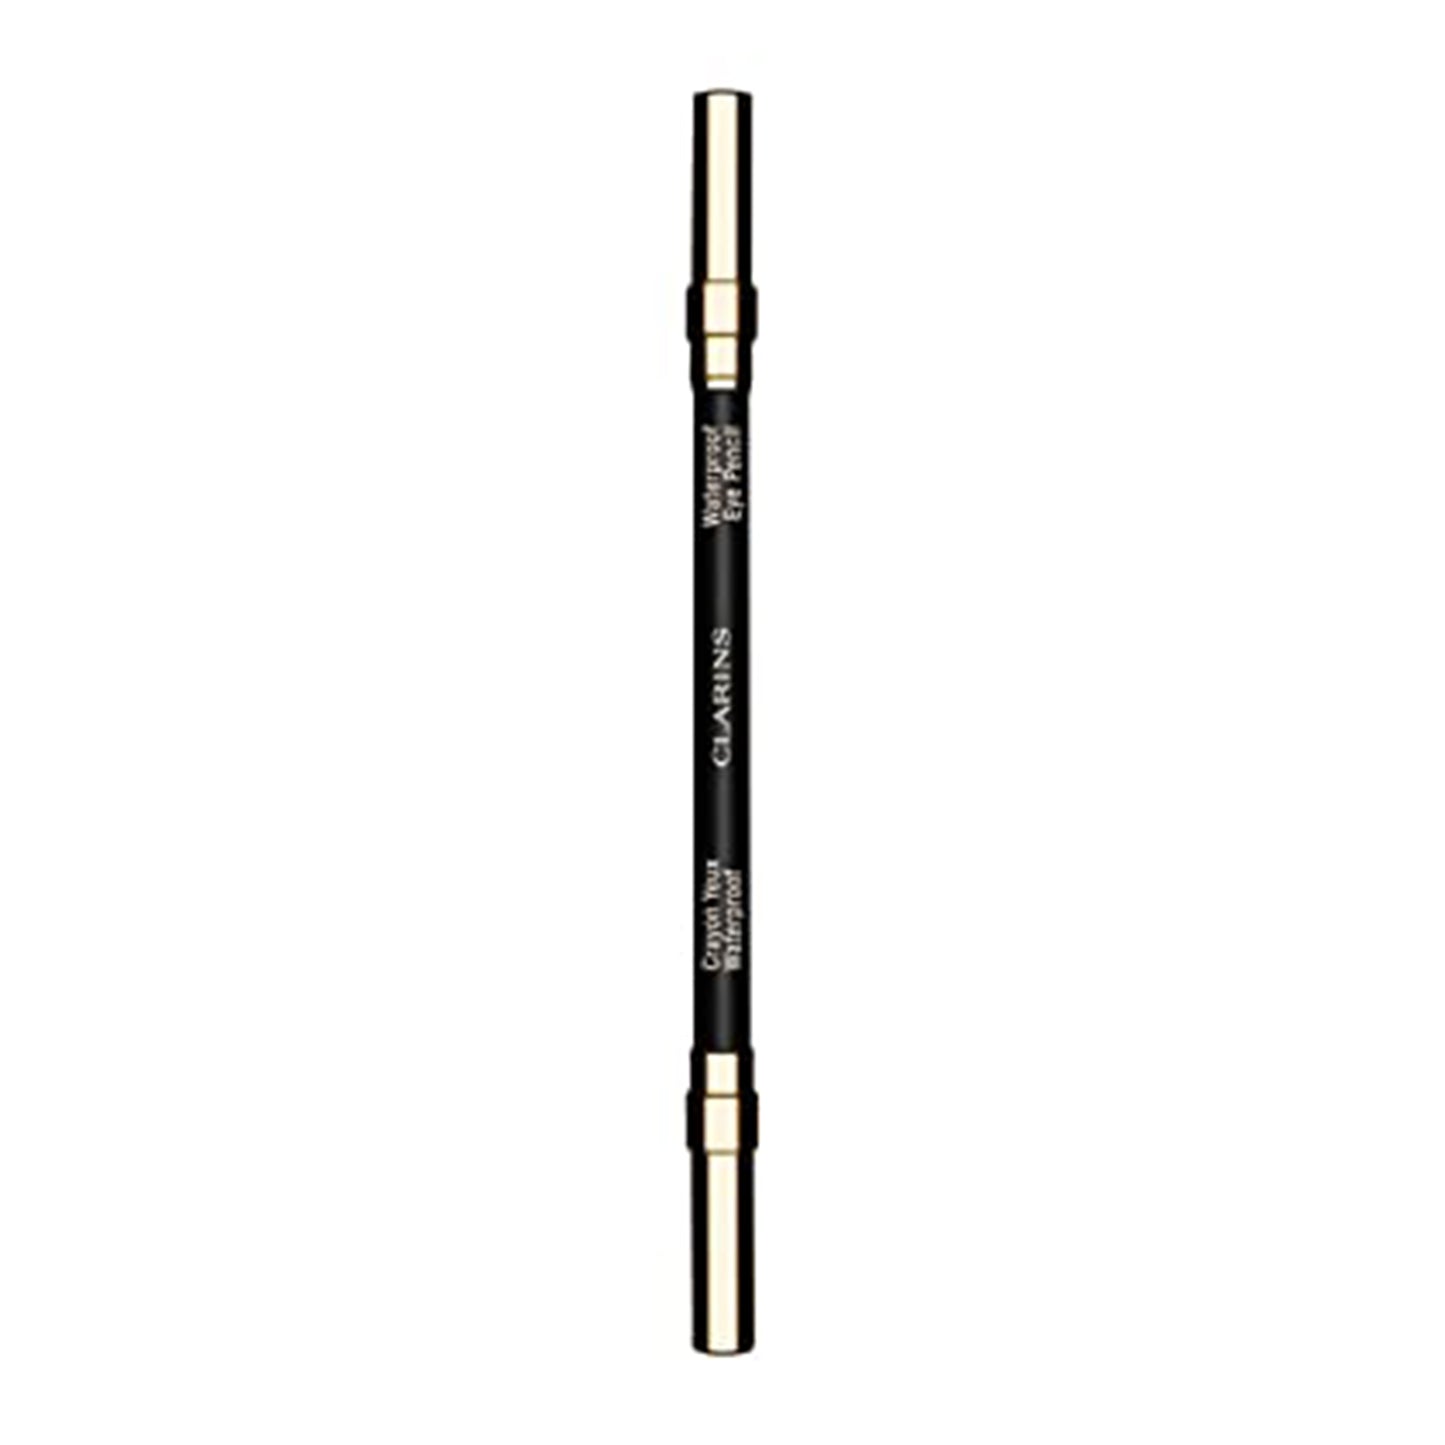 Clarins Crayon Yeux Waterproof Eyeliner Pencil - 01 Noir 1.2 g / 0.04 oz